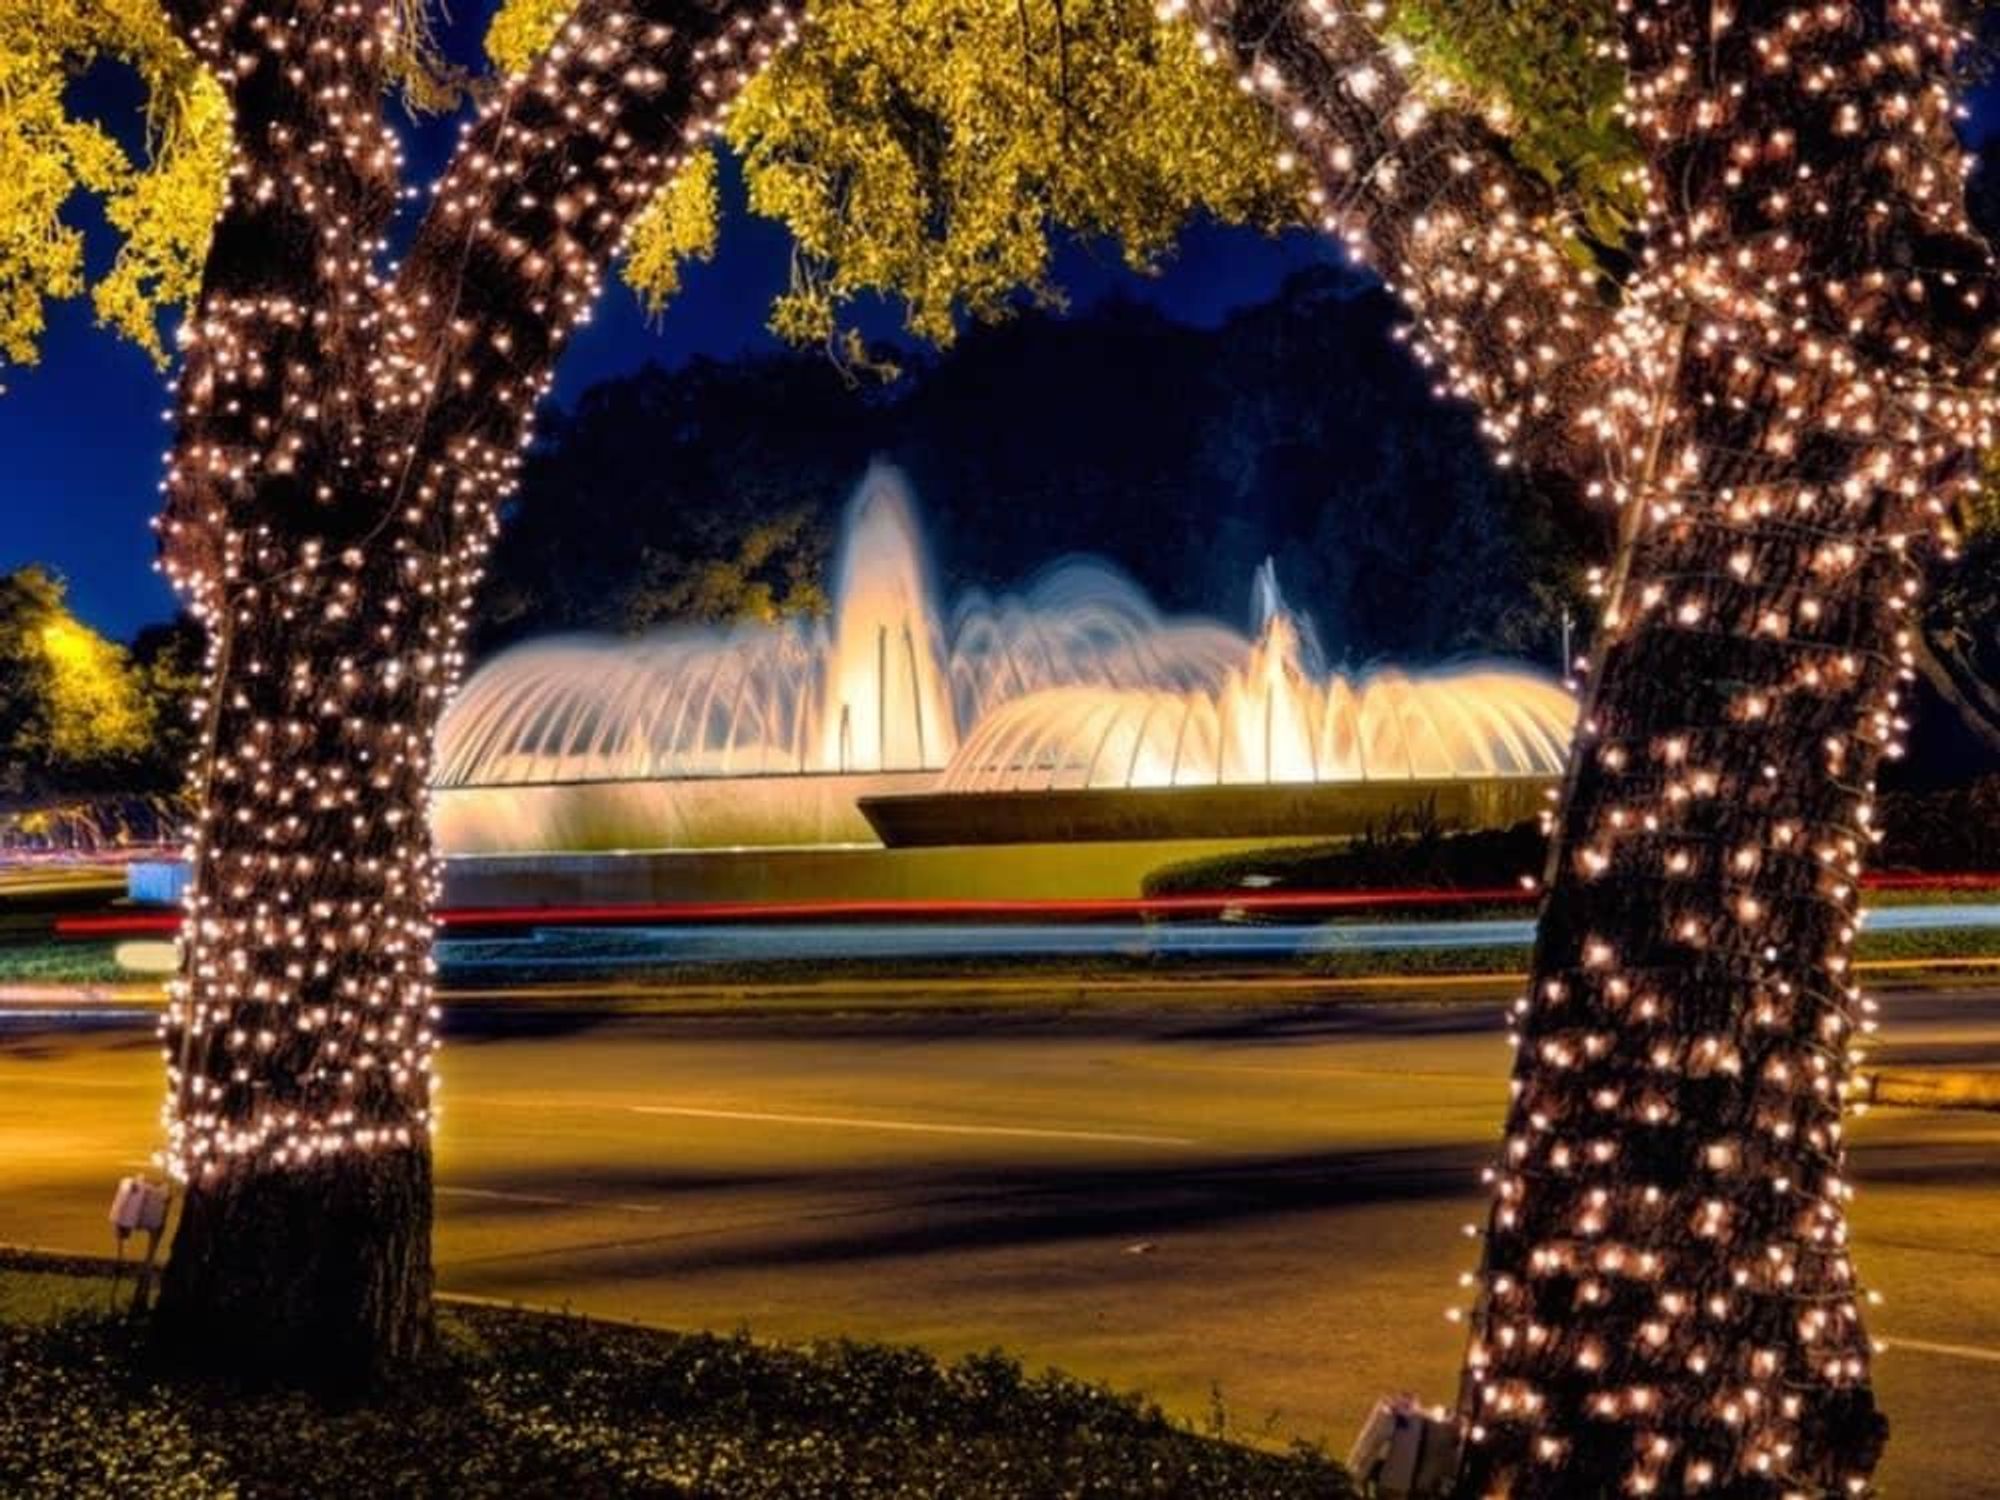 Mecom Fountain at night